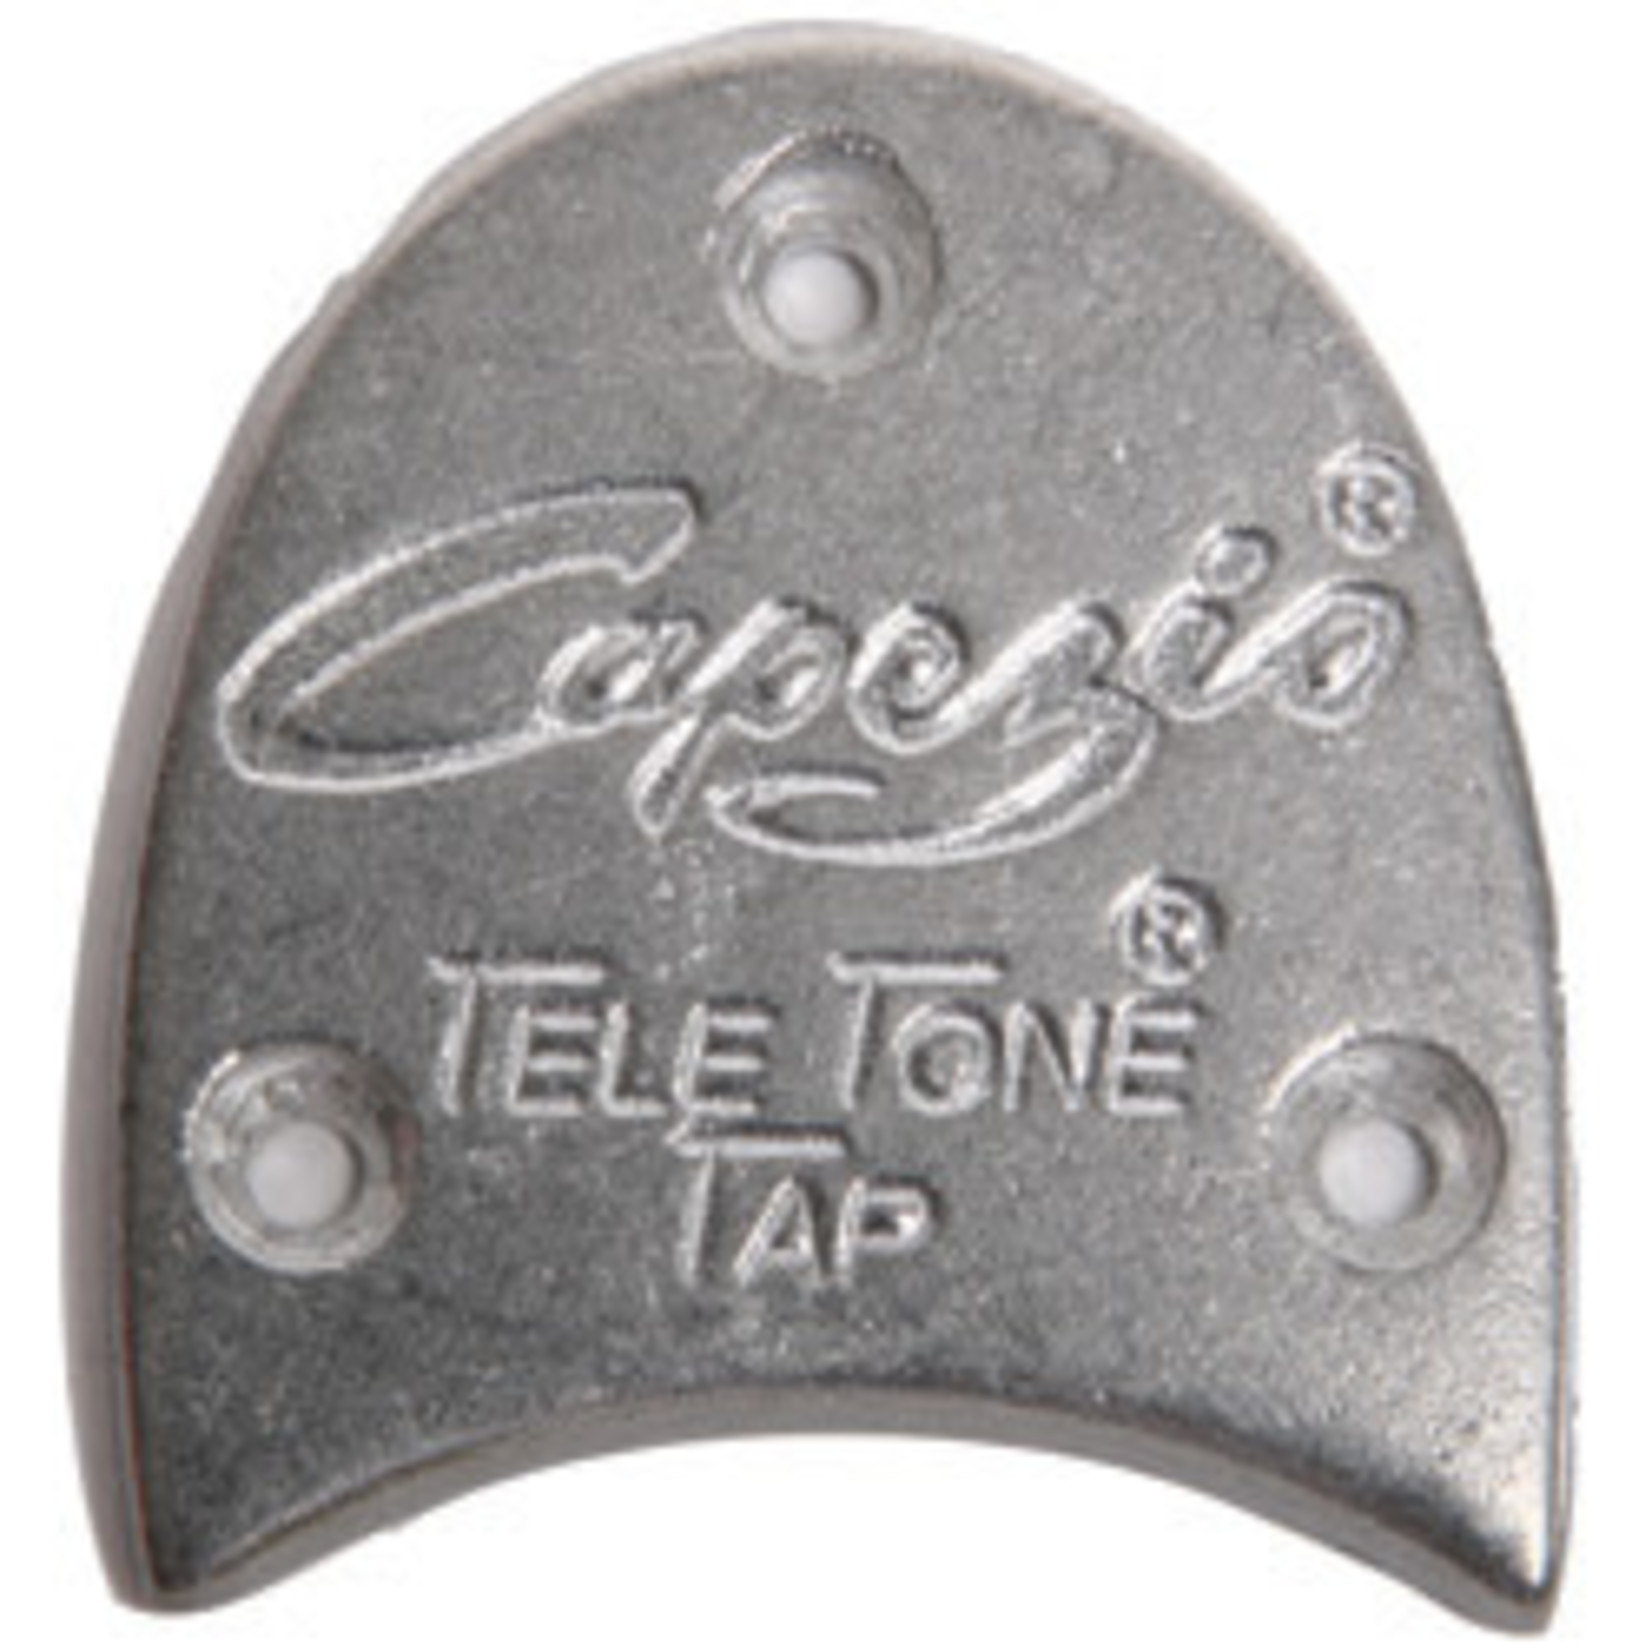 Capezio & Bunheads TTH1 - Teletone HEEL Taps